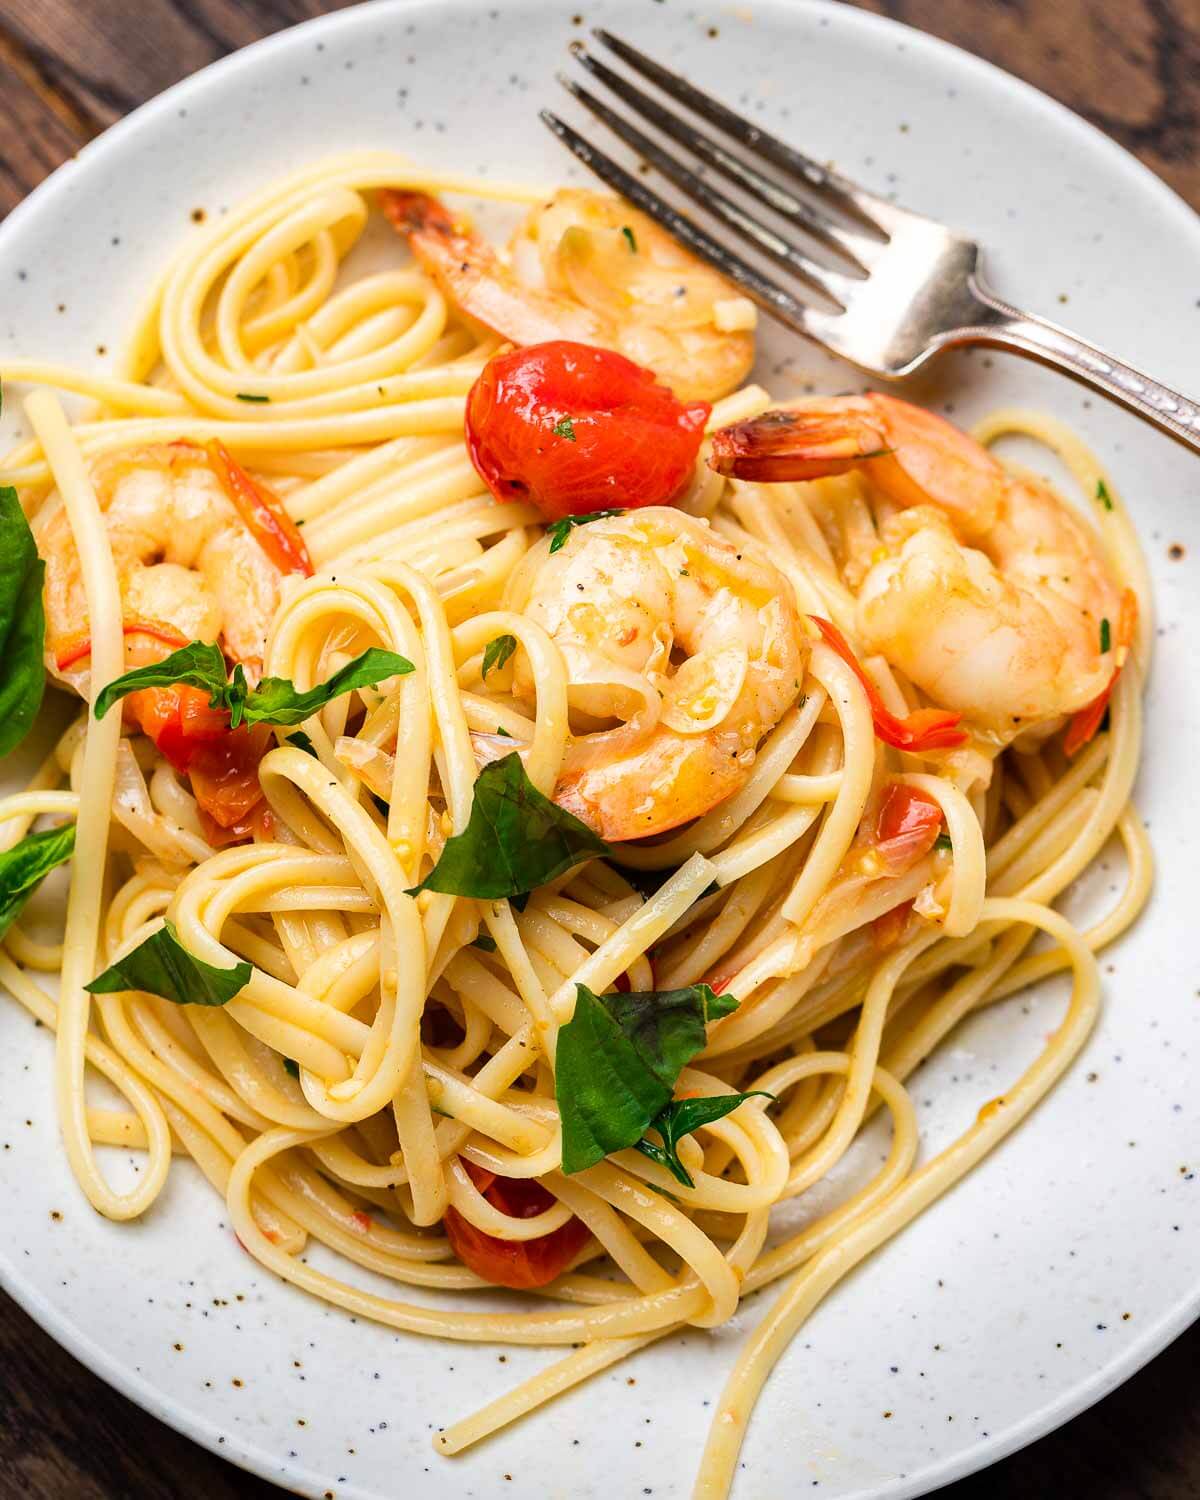 Shrimp tomato basil pasta in white plate with fork.